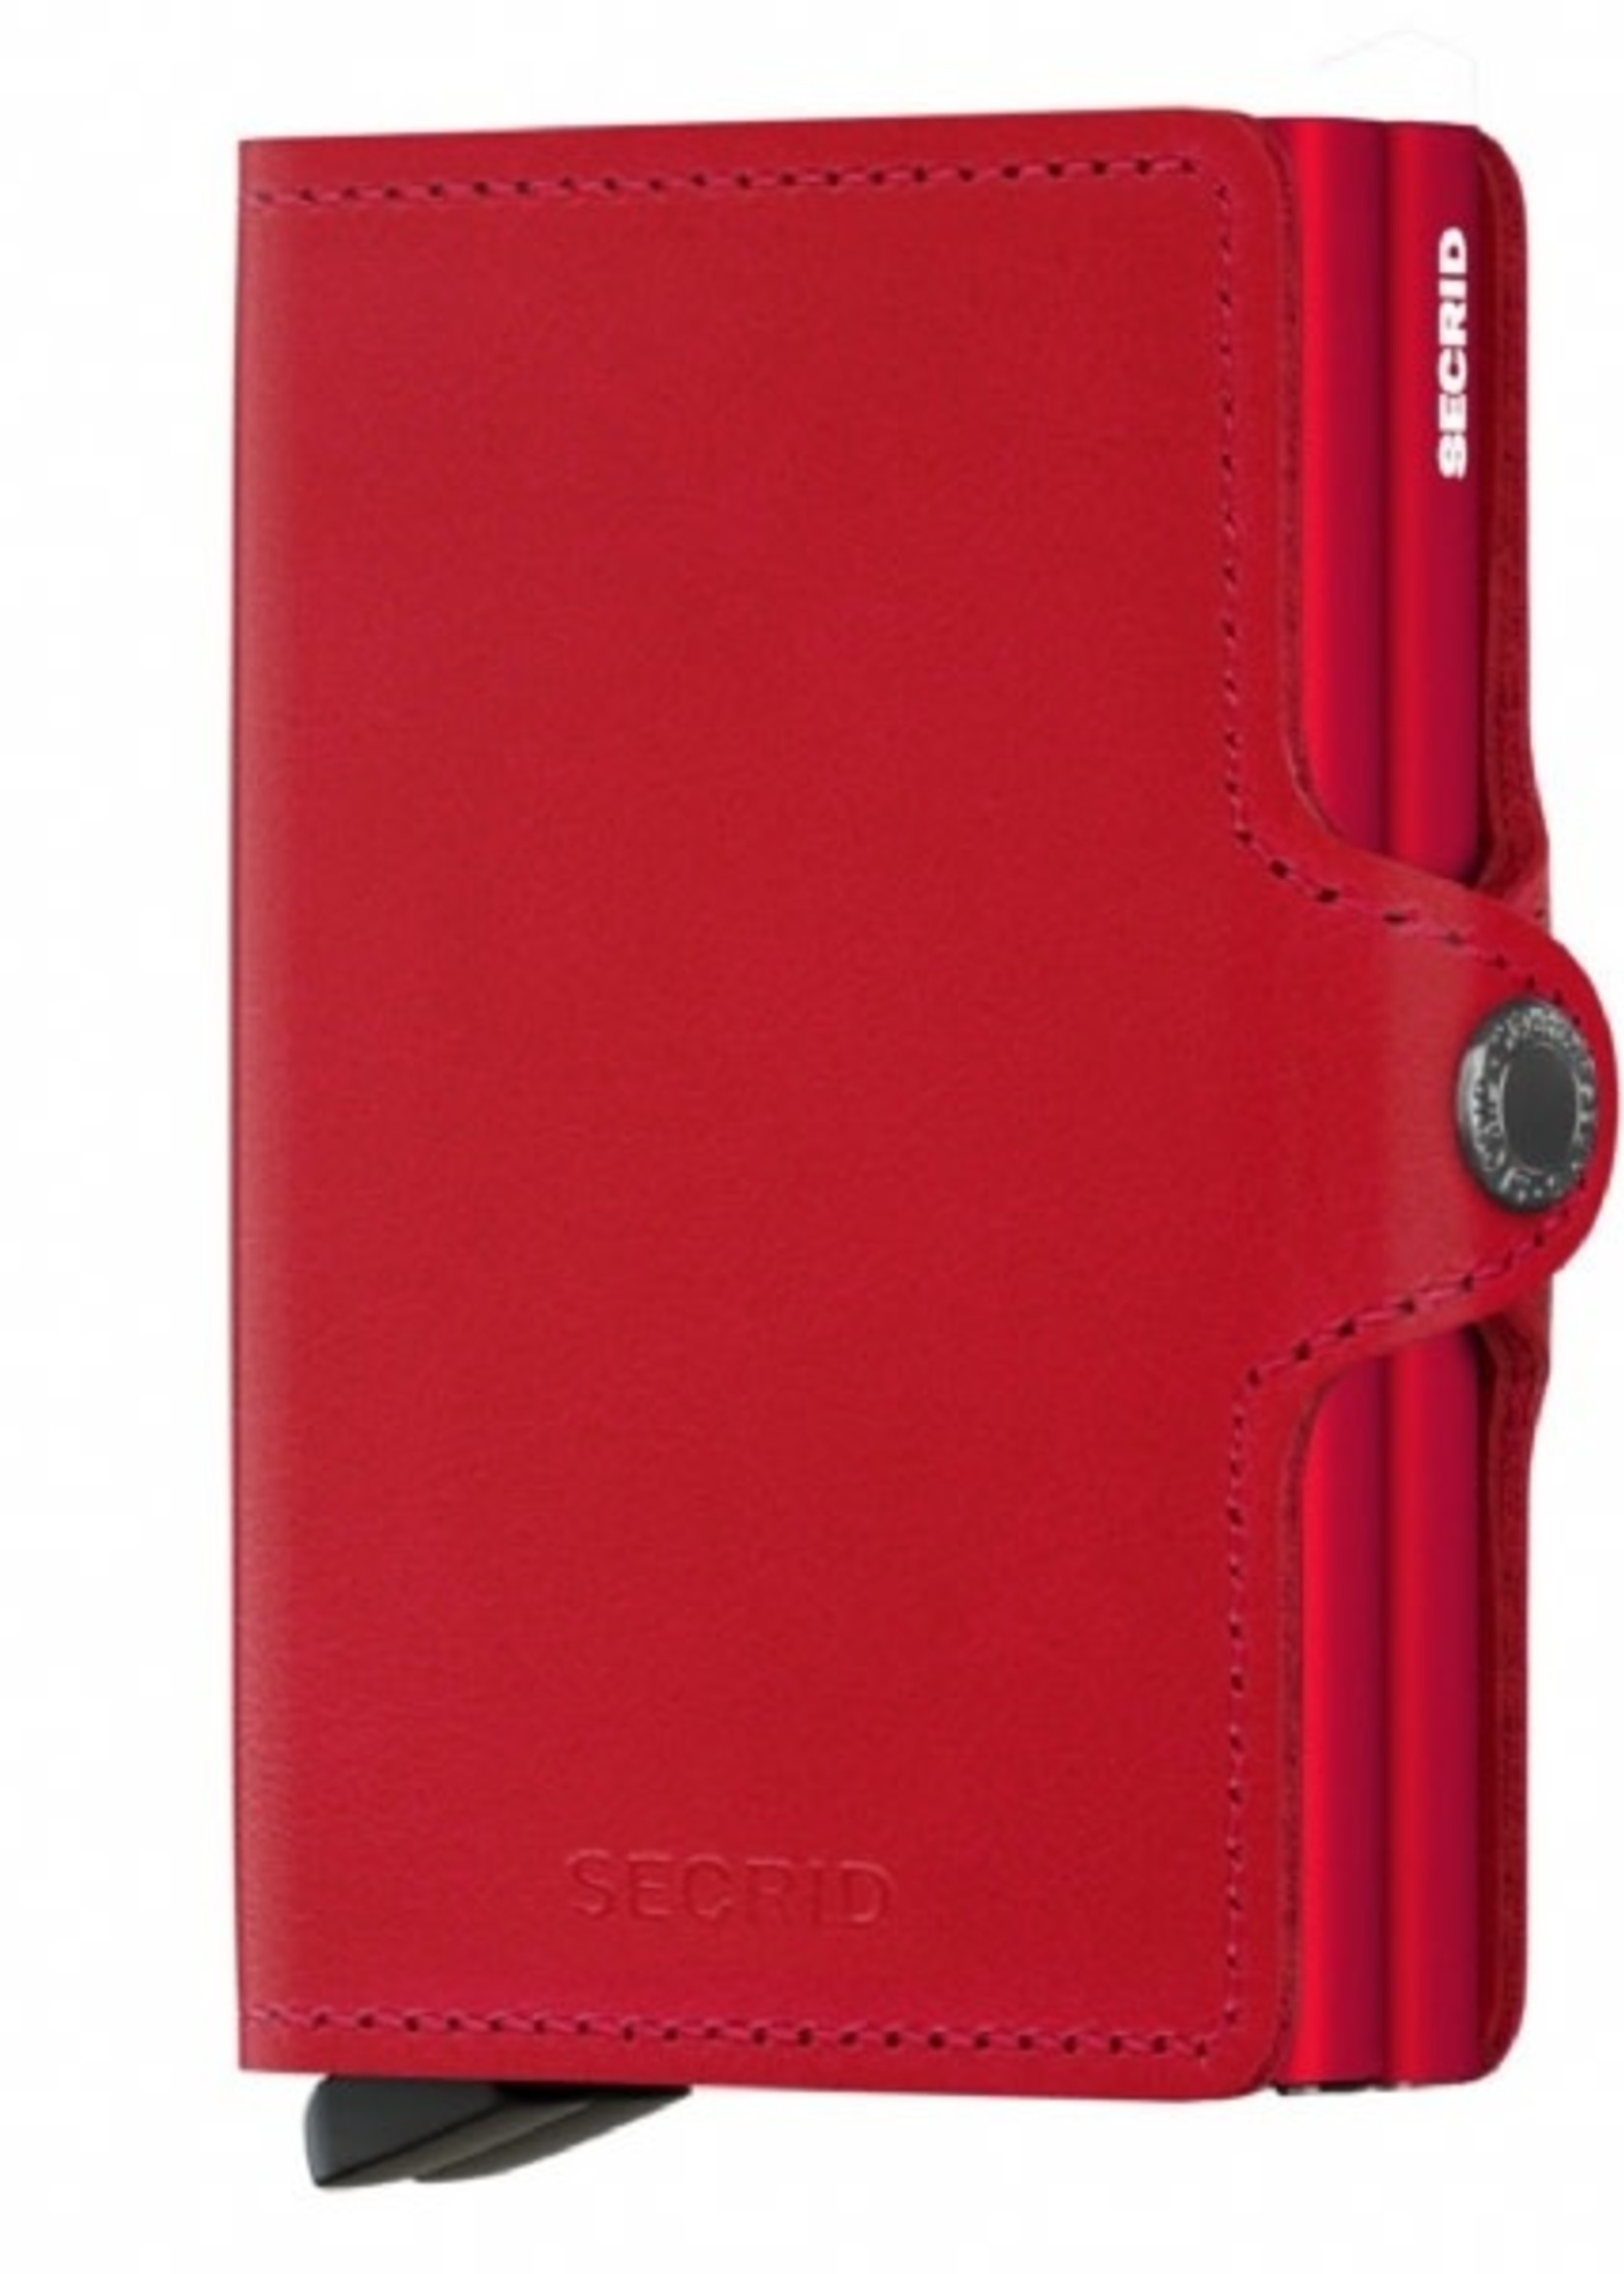 Secrid Twin Wallet Original Red